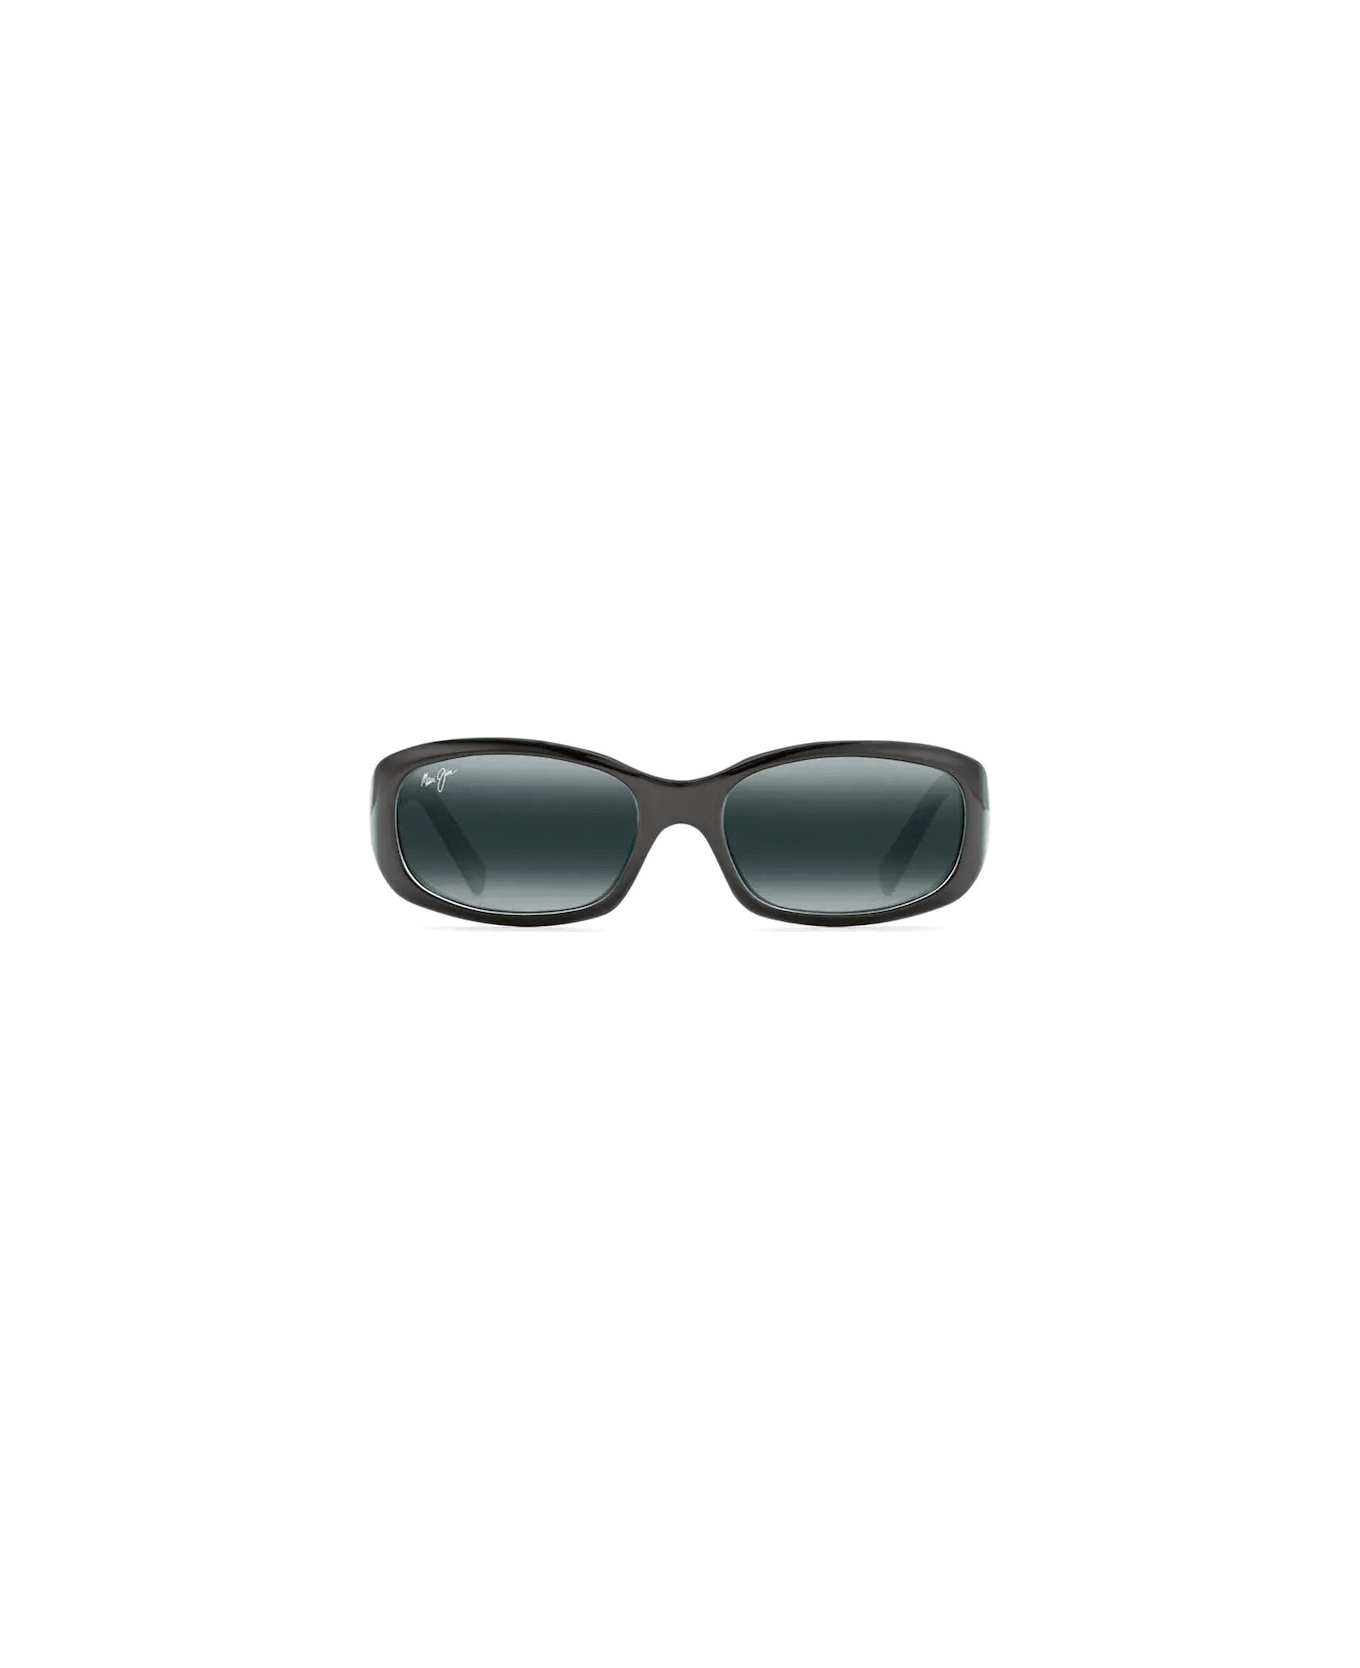 Maui Jim MJ219-03 Sunglasses サングラス